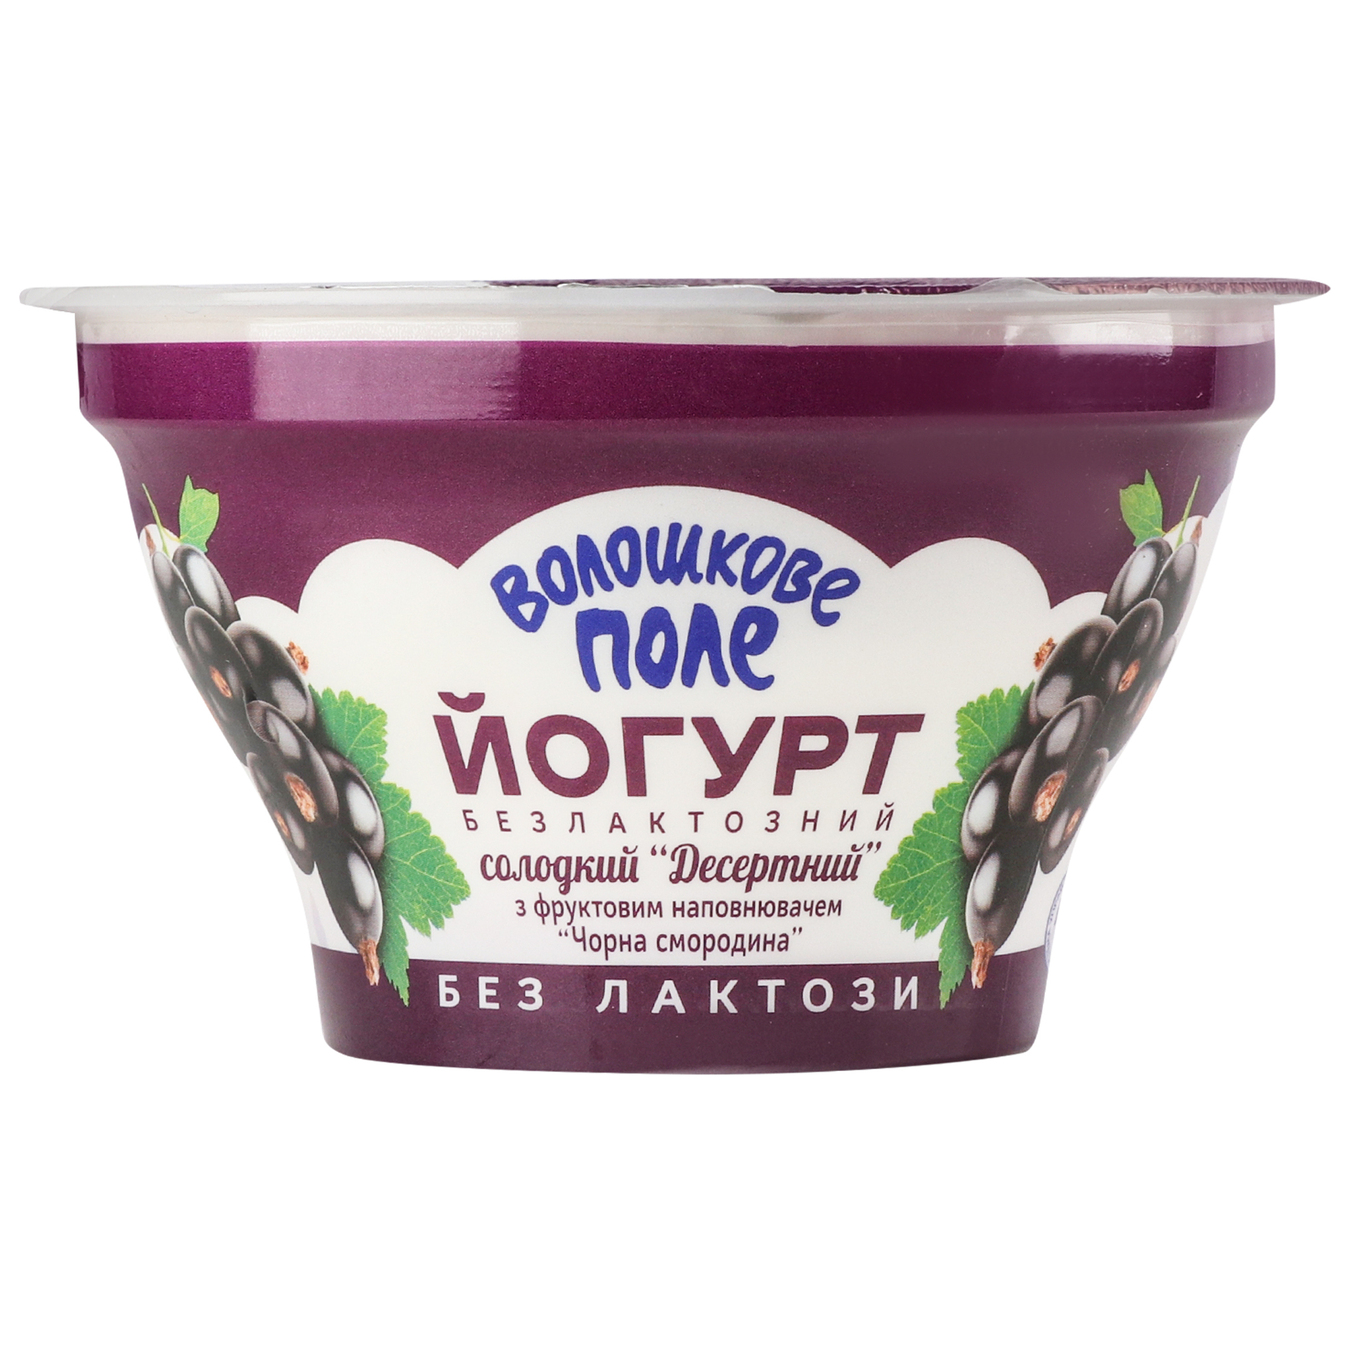 Yogurt cornfield black currant lactose-free 2.8% cup 140g